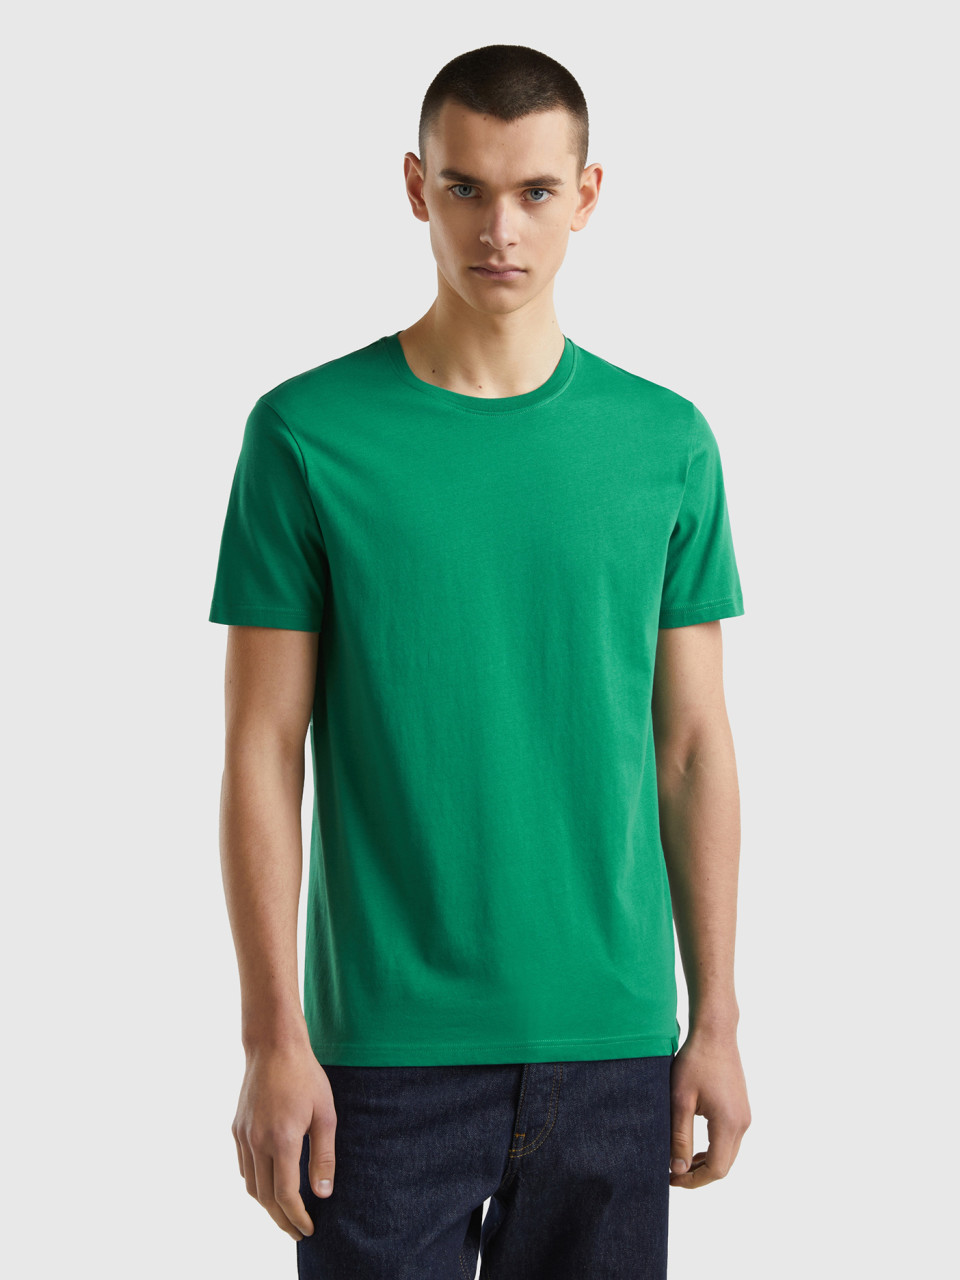 Benetton, Dark Green T-shirt, Dark Green, Men